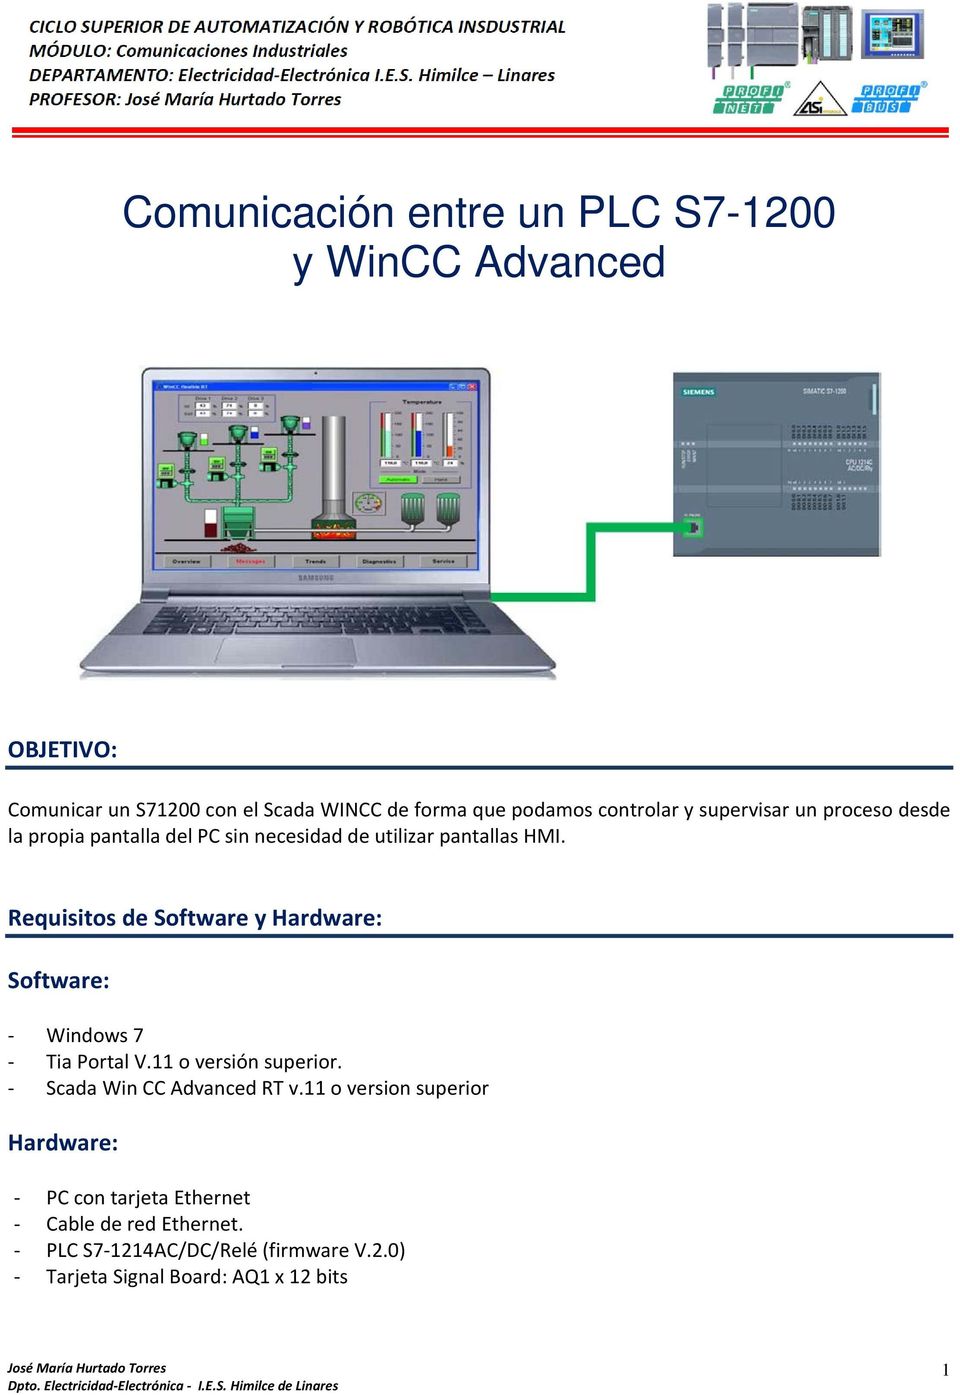 Requisitos de Software y Hardware: Software: - Windows 7 - Tia Portal V.11 o versión superior. - Scada Win CC Advanced RT v.